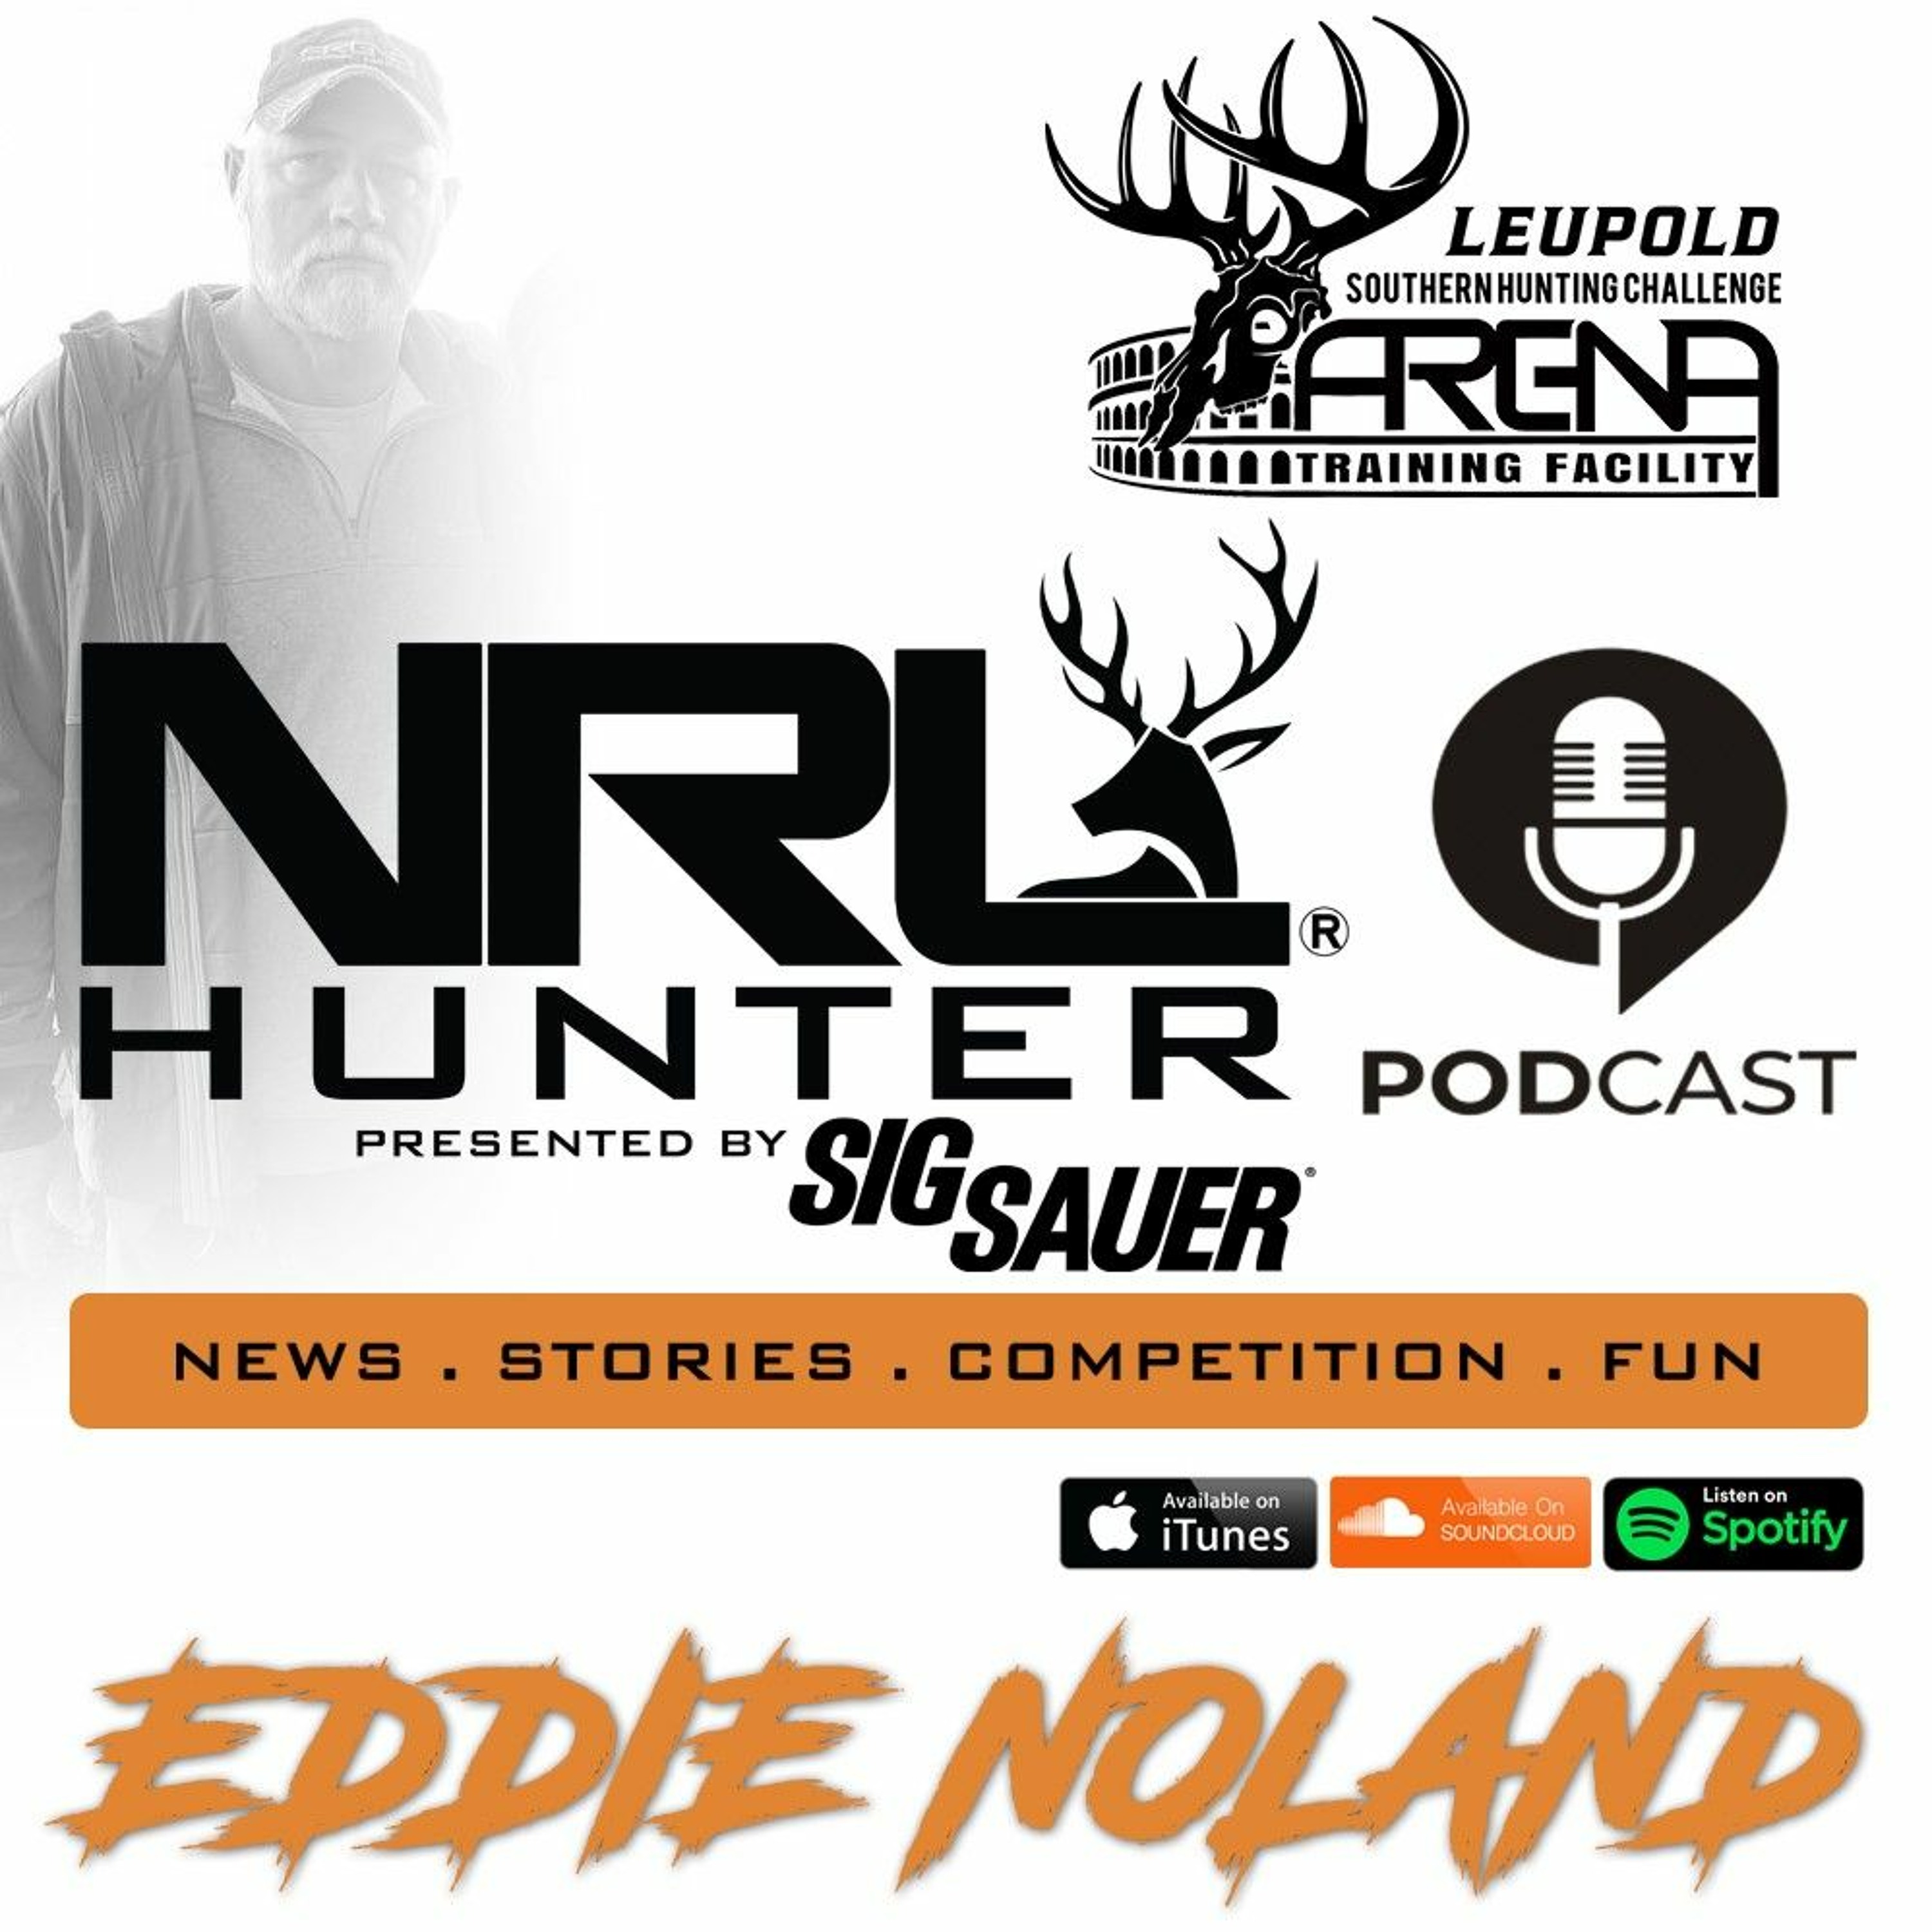 2022 Southern Hunting Challenge with Eddie Nolan NRLH Podcast Season 2 | Ep. 3